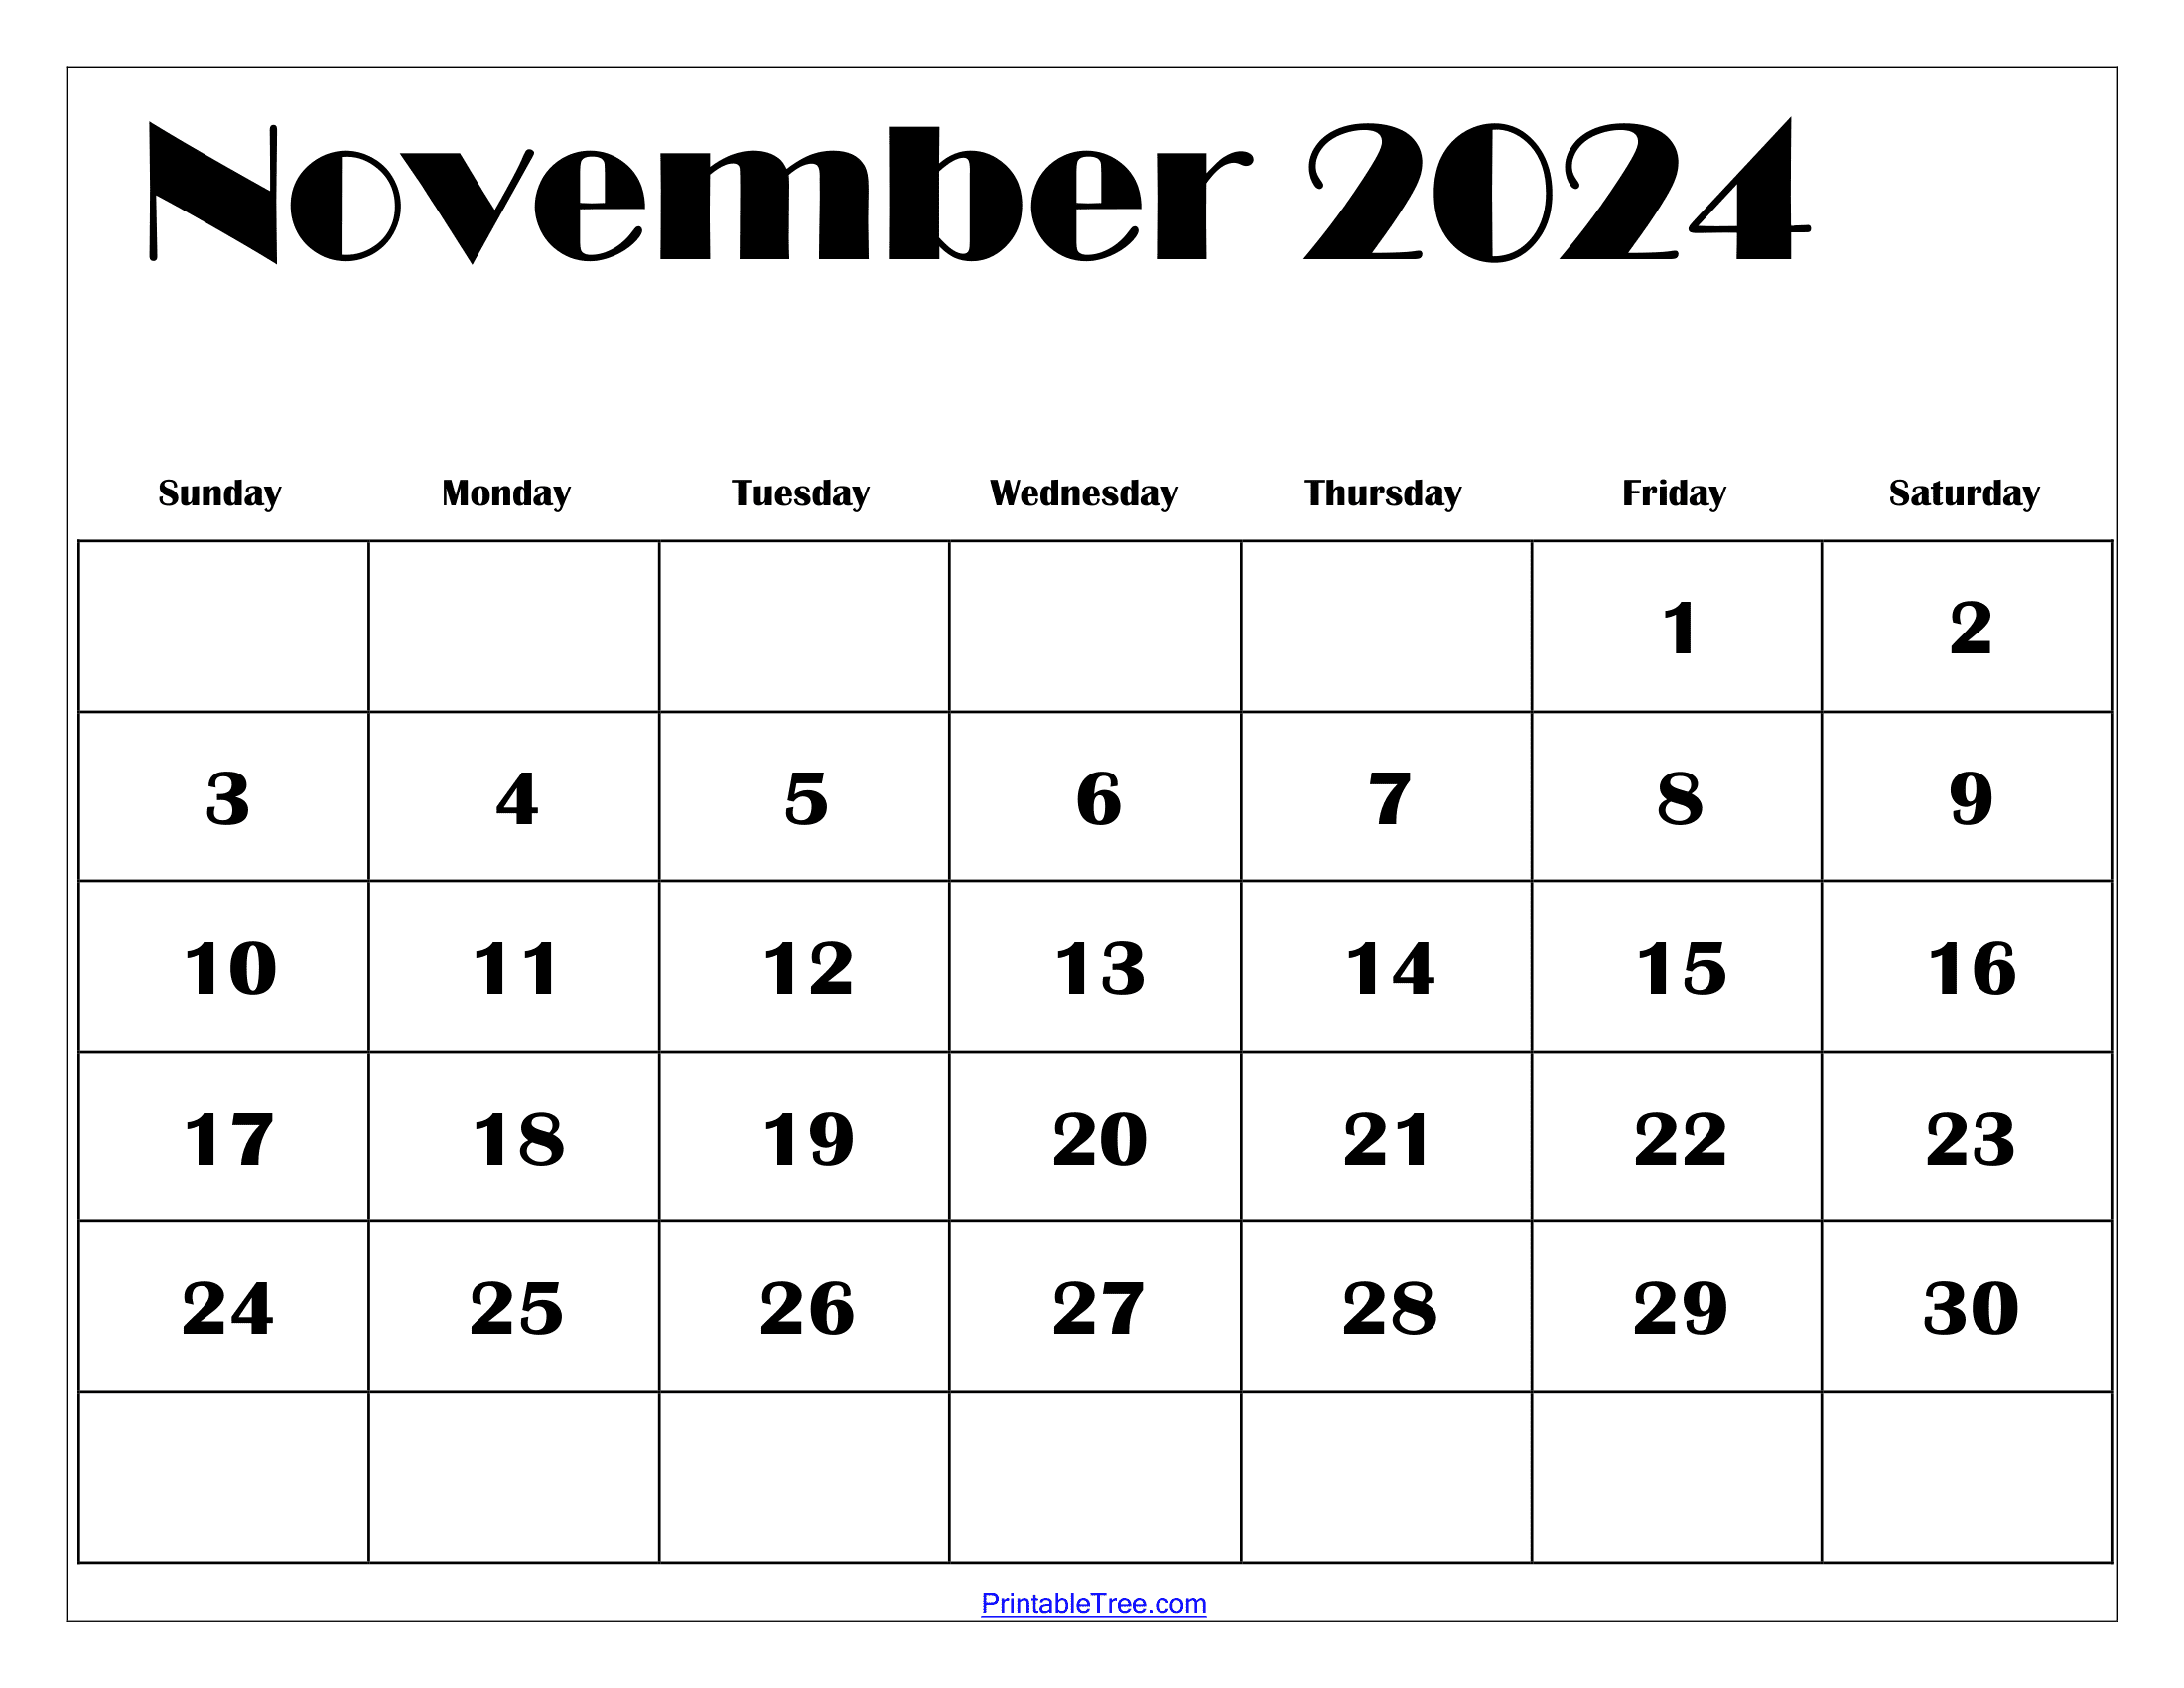 November 2024 Calendar Printable Pdf Template With Holidays for November 2024 Free Printable Calendar